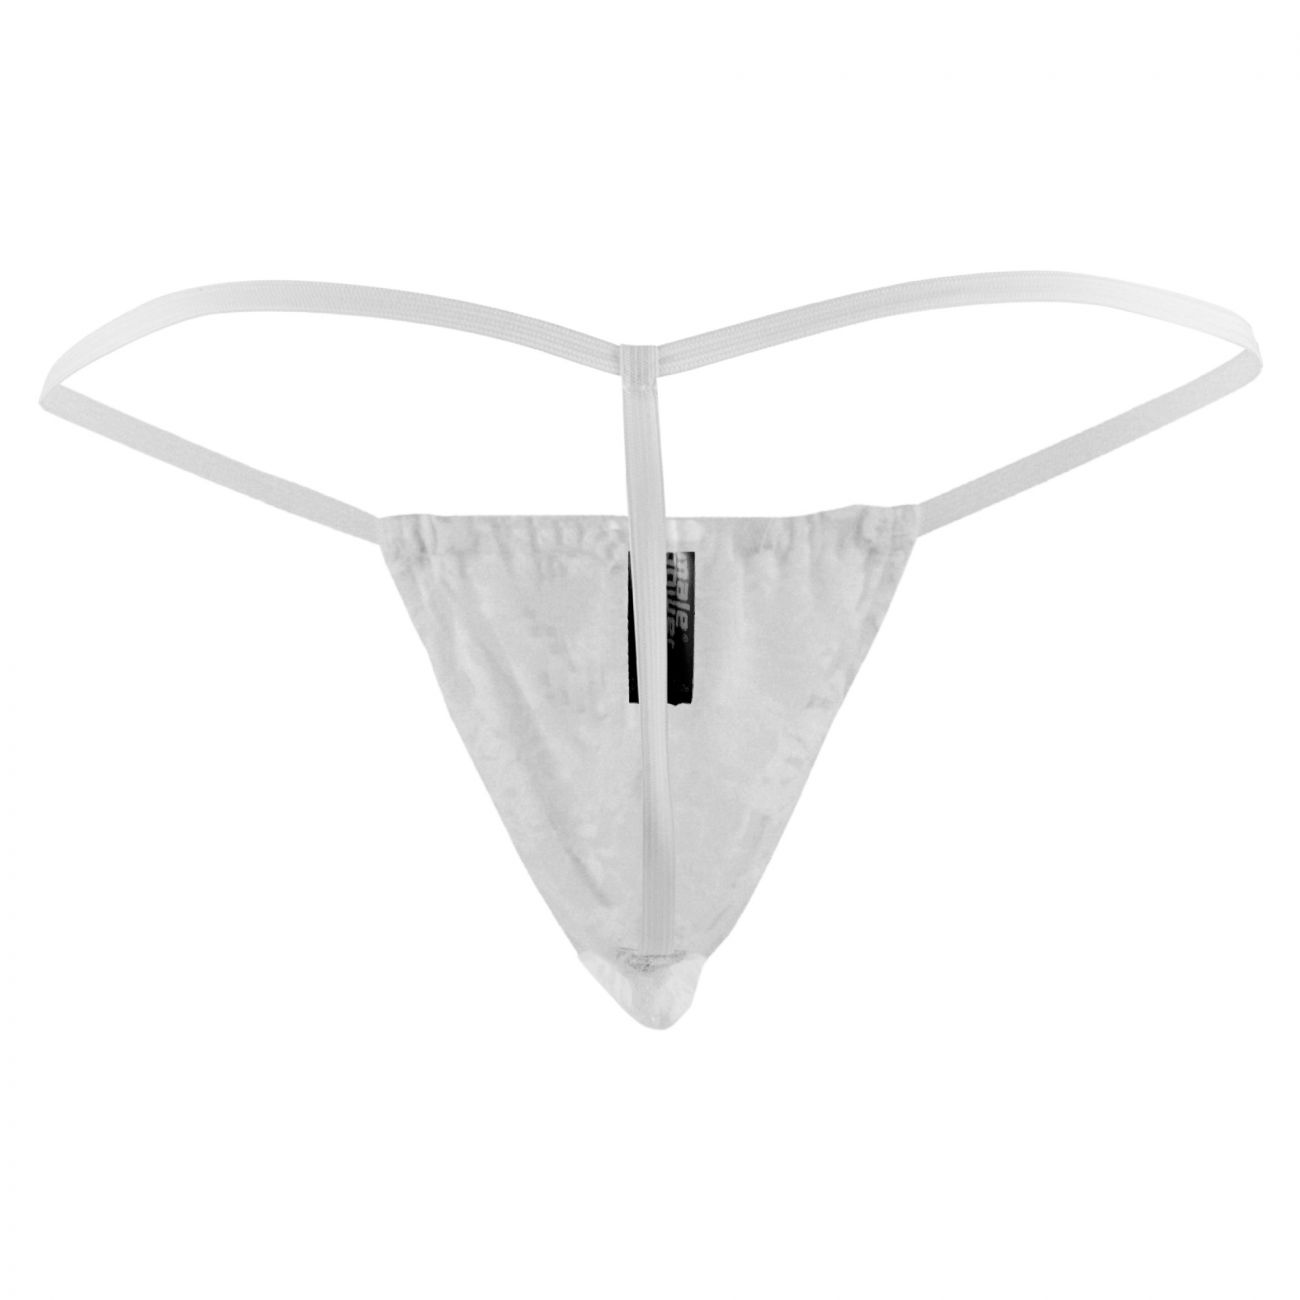 Mens Underwear: Male Power 450162 Stretch Lace Posing Strap Thong | eBay